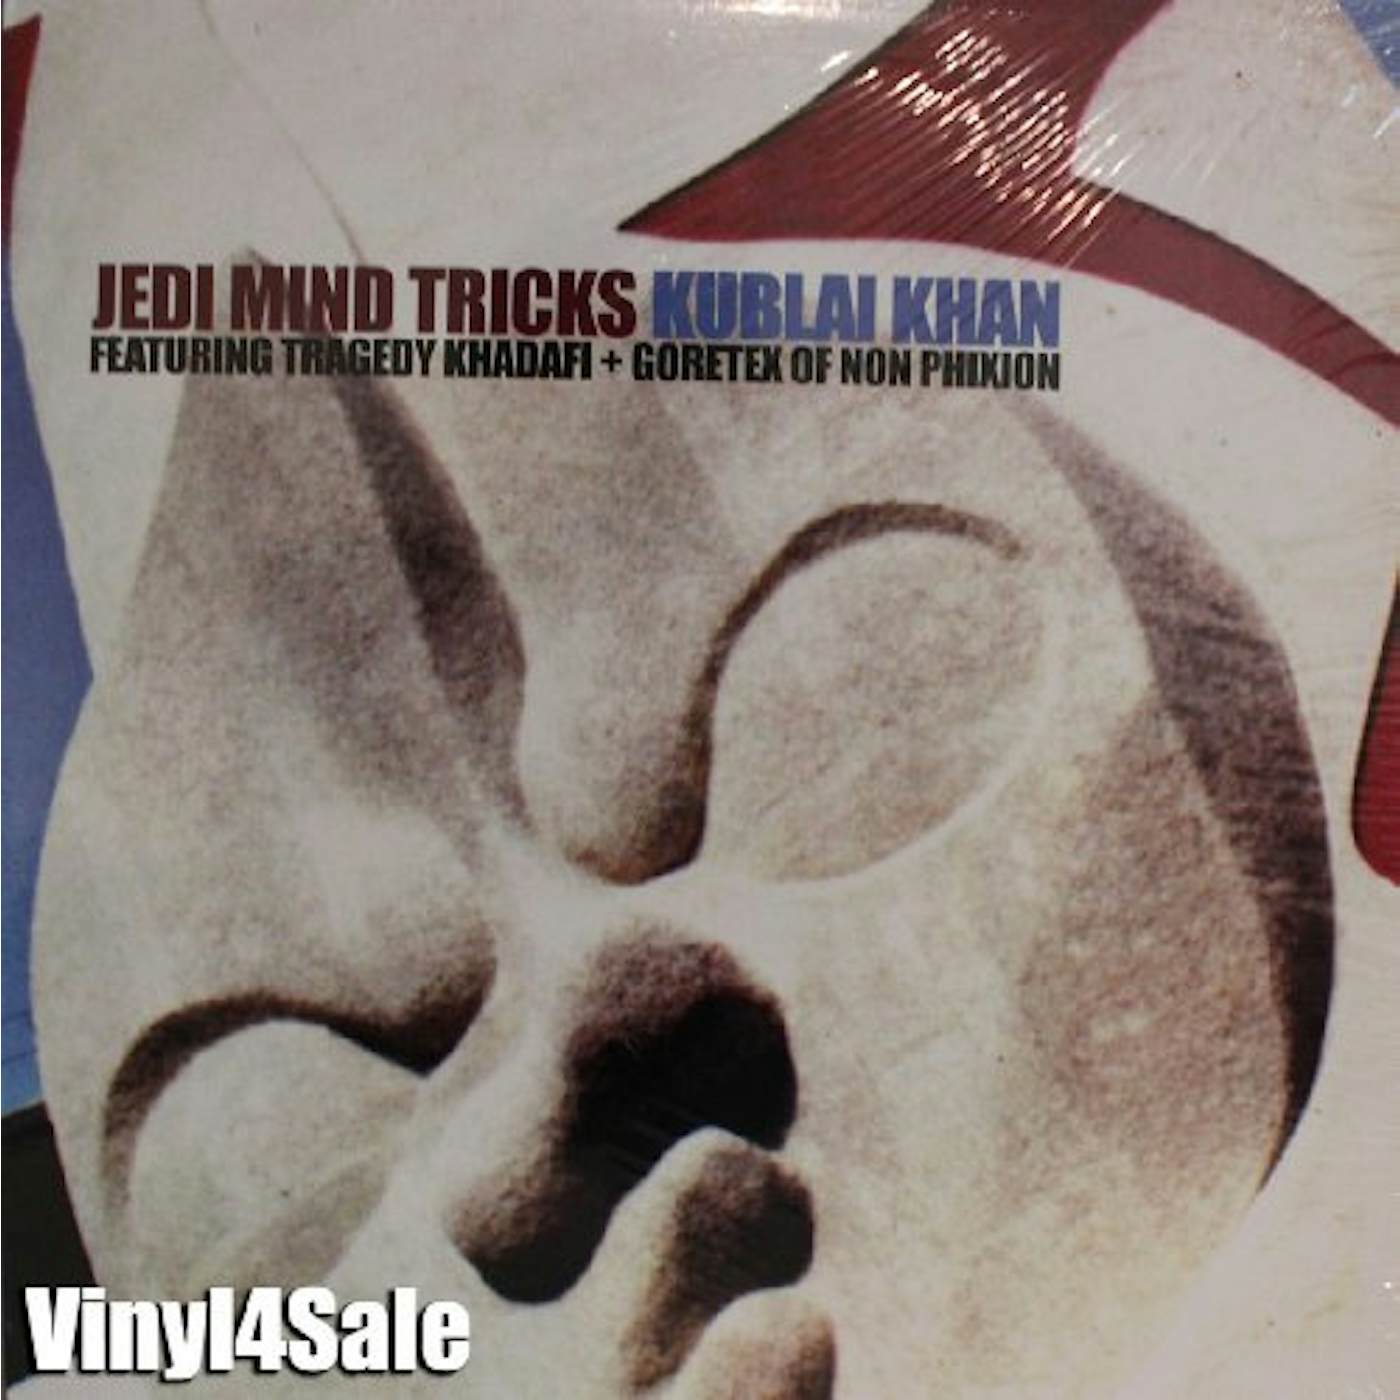 Jedi Mind Tricks Kublai Khan Vinyl Record